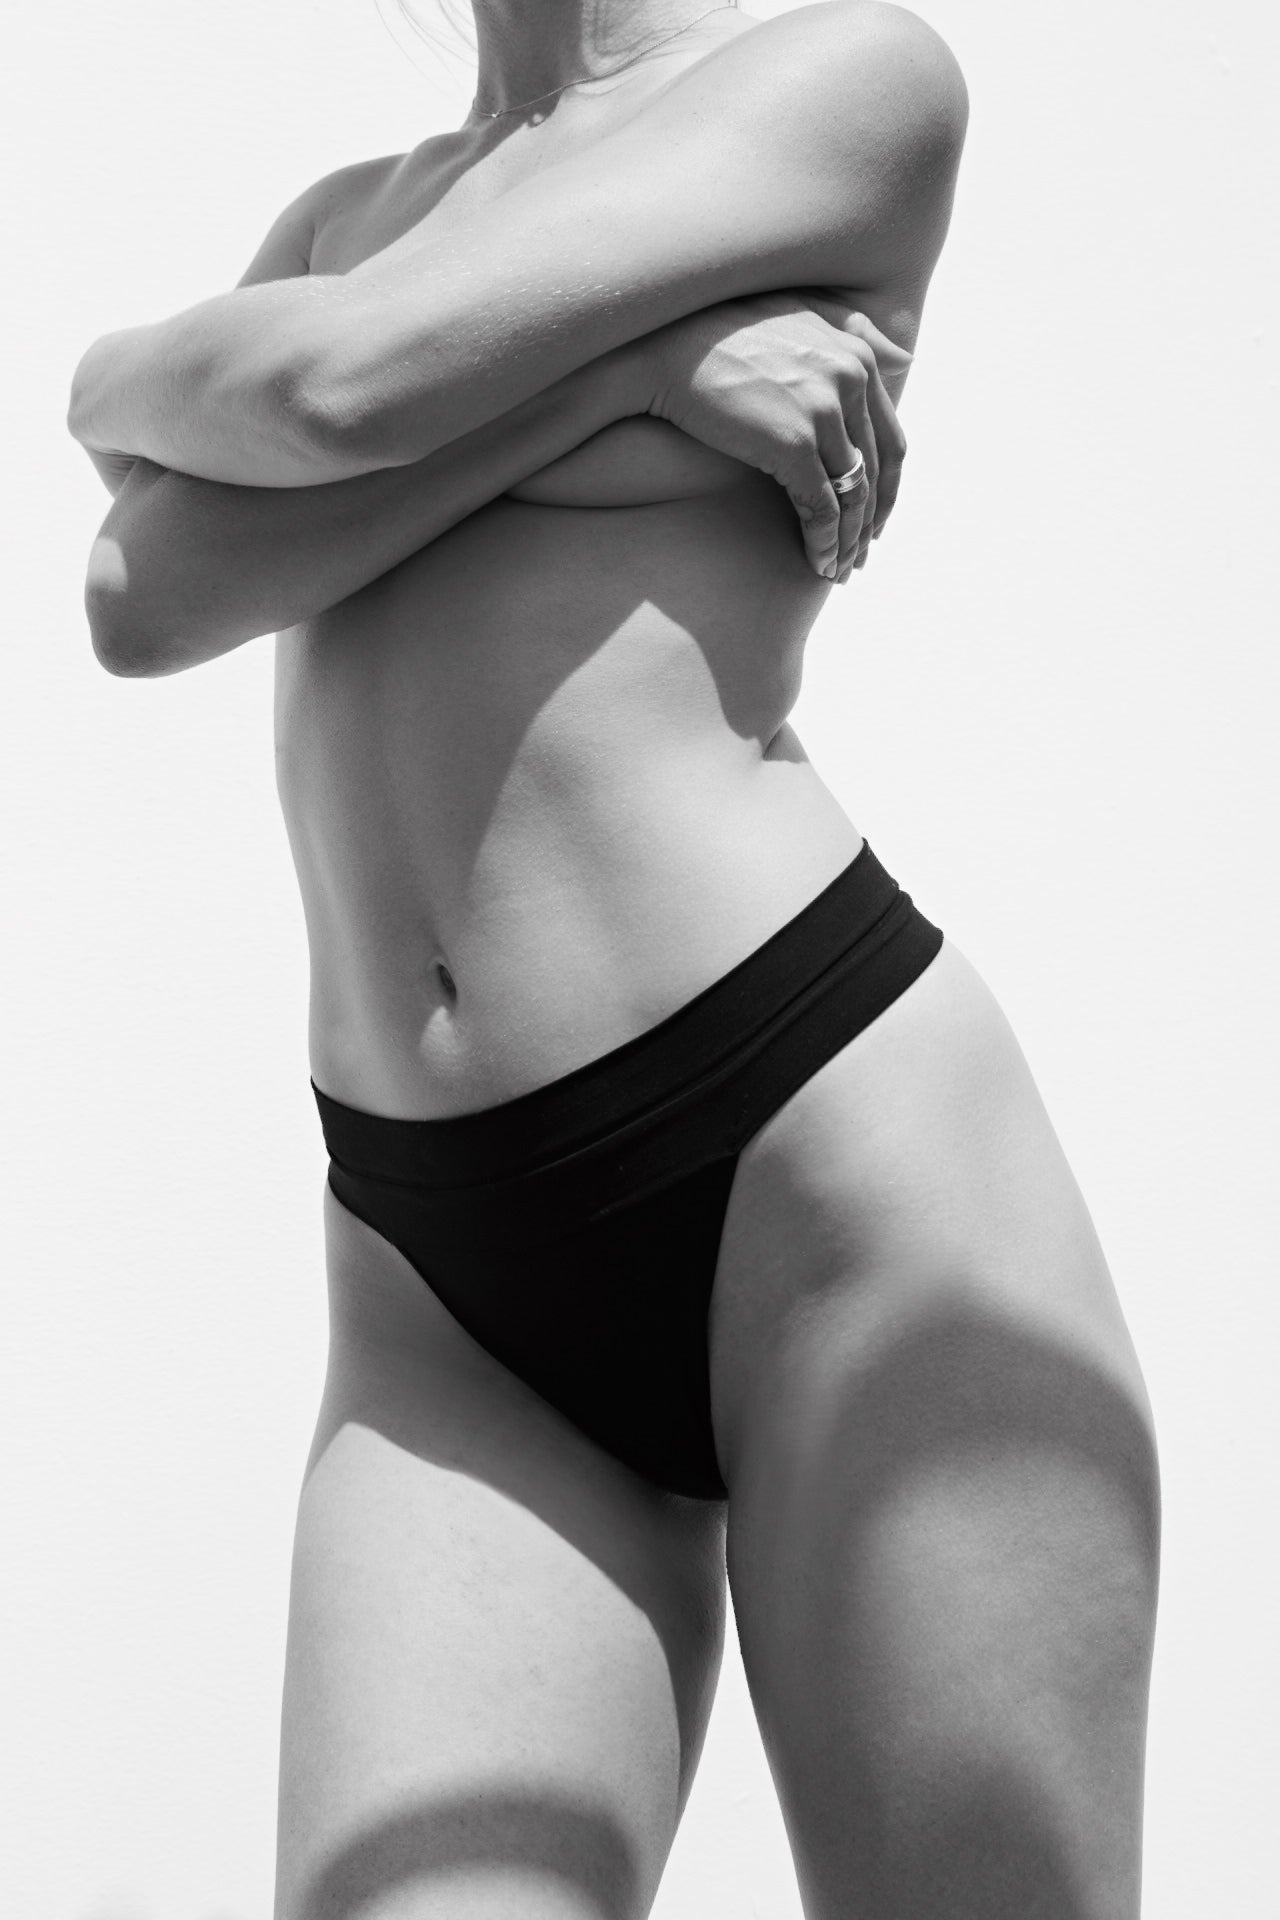 ✼☁❦CVKN Sport Sando Bra and Panty Set Yoga Zumba Casual Wear Sports  Underwear no padding